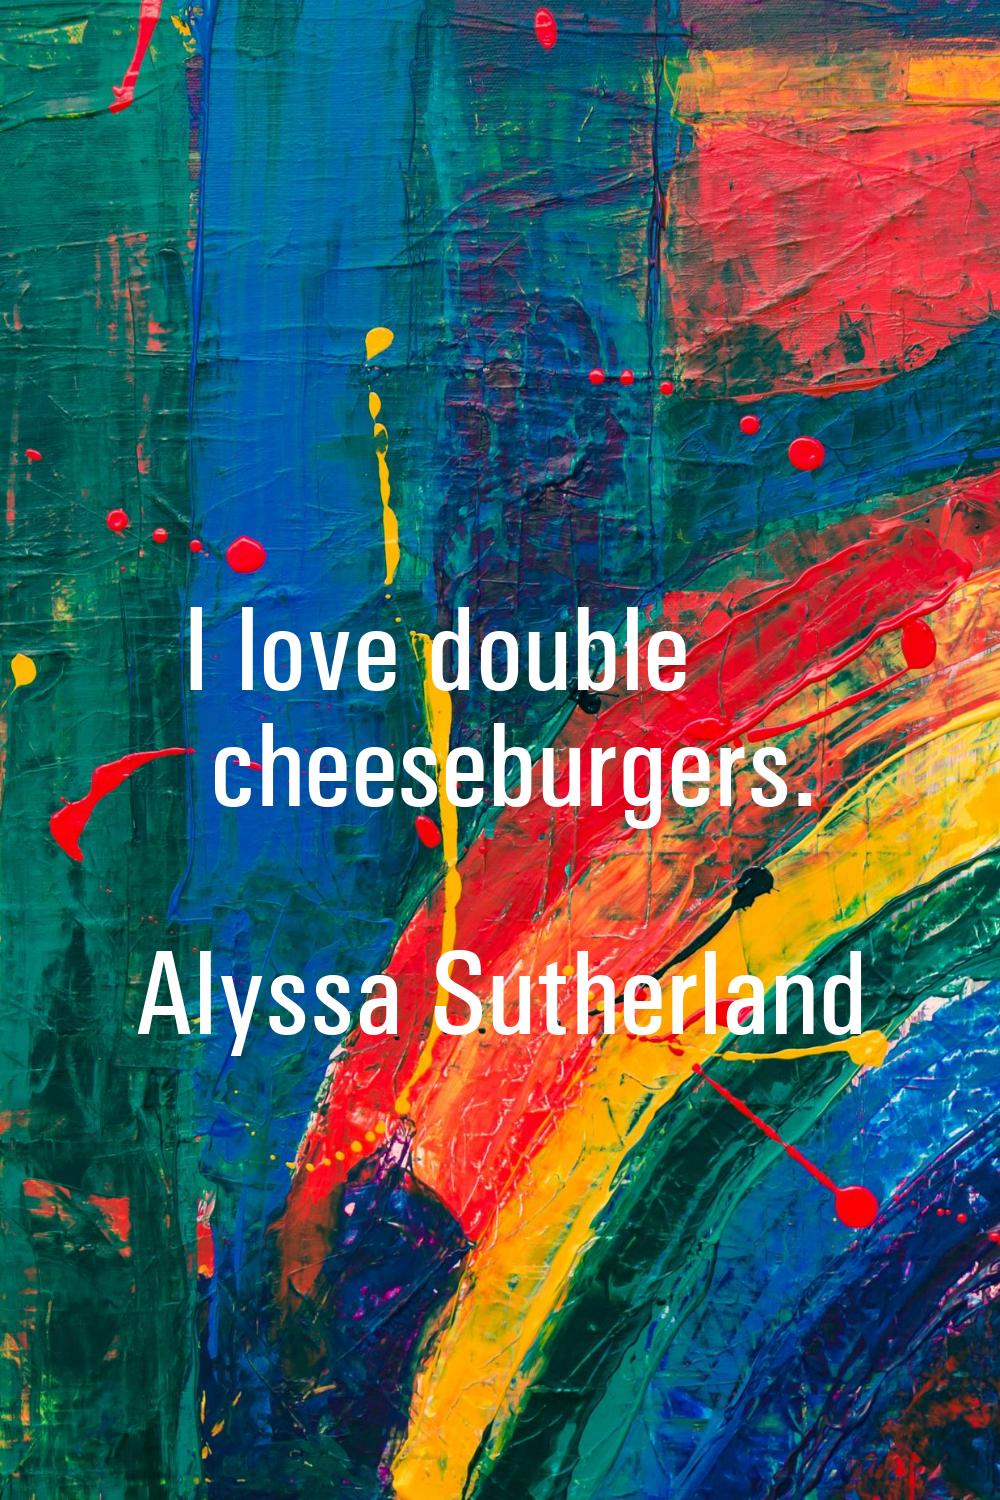 I love double cheeseburgers.